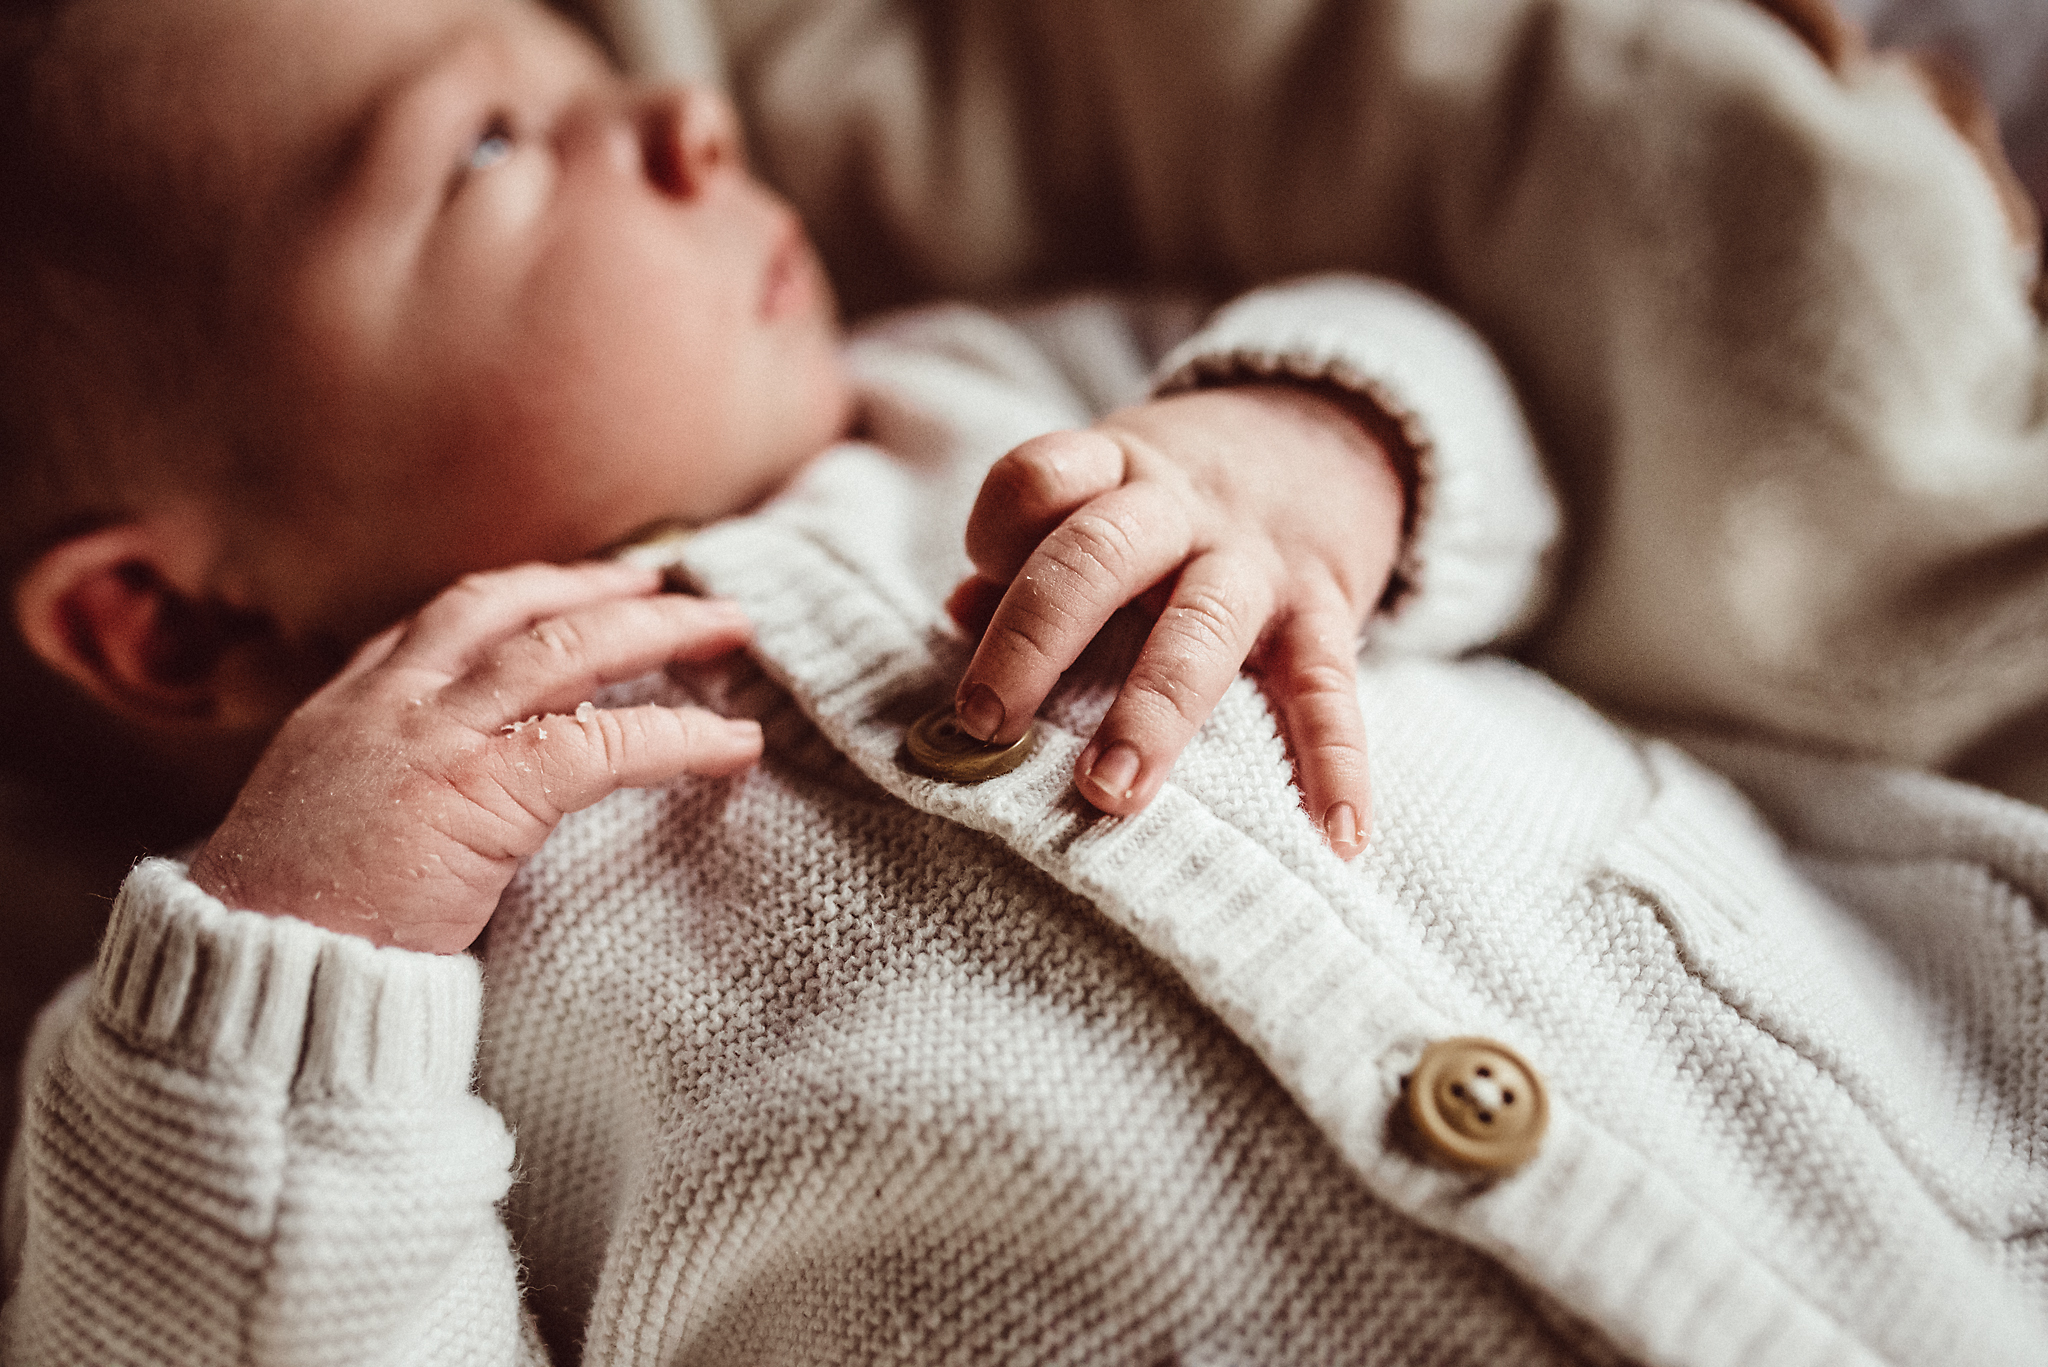 Close up of newborn baby's hands